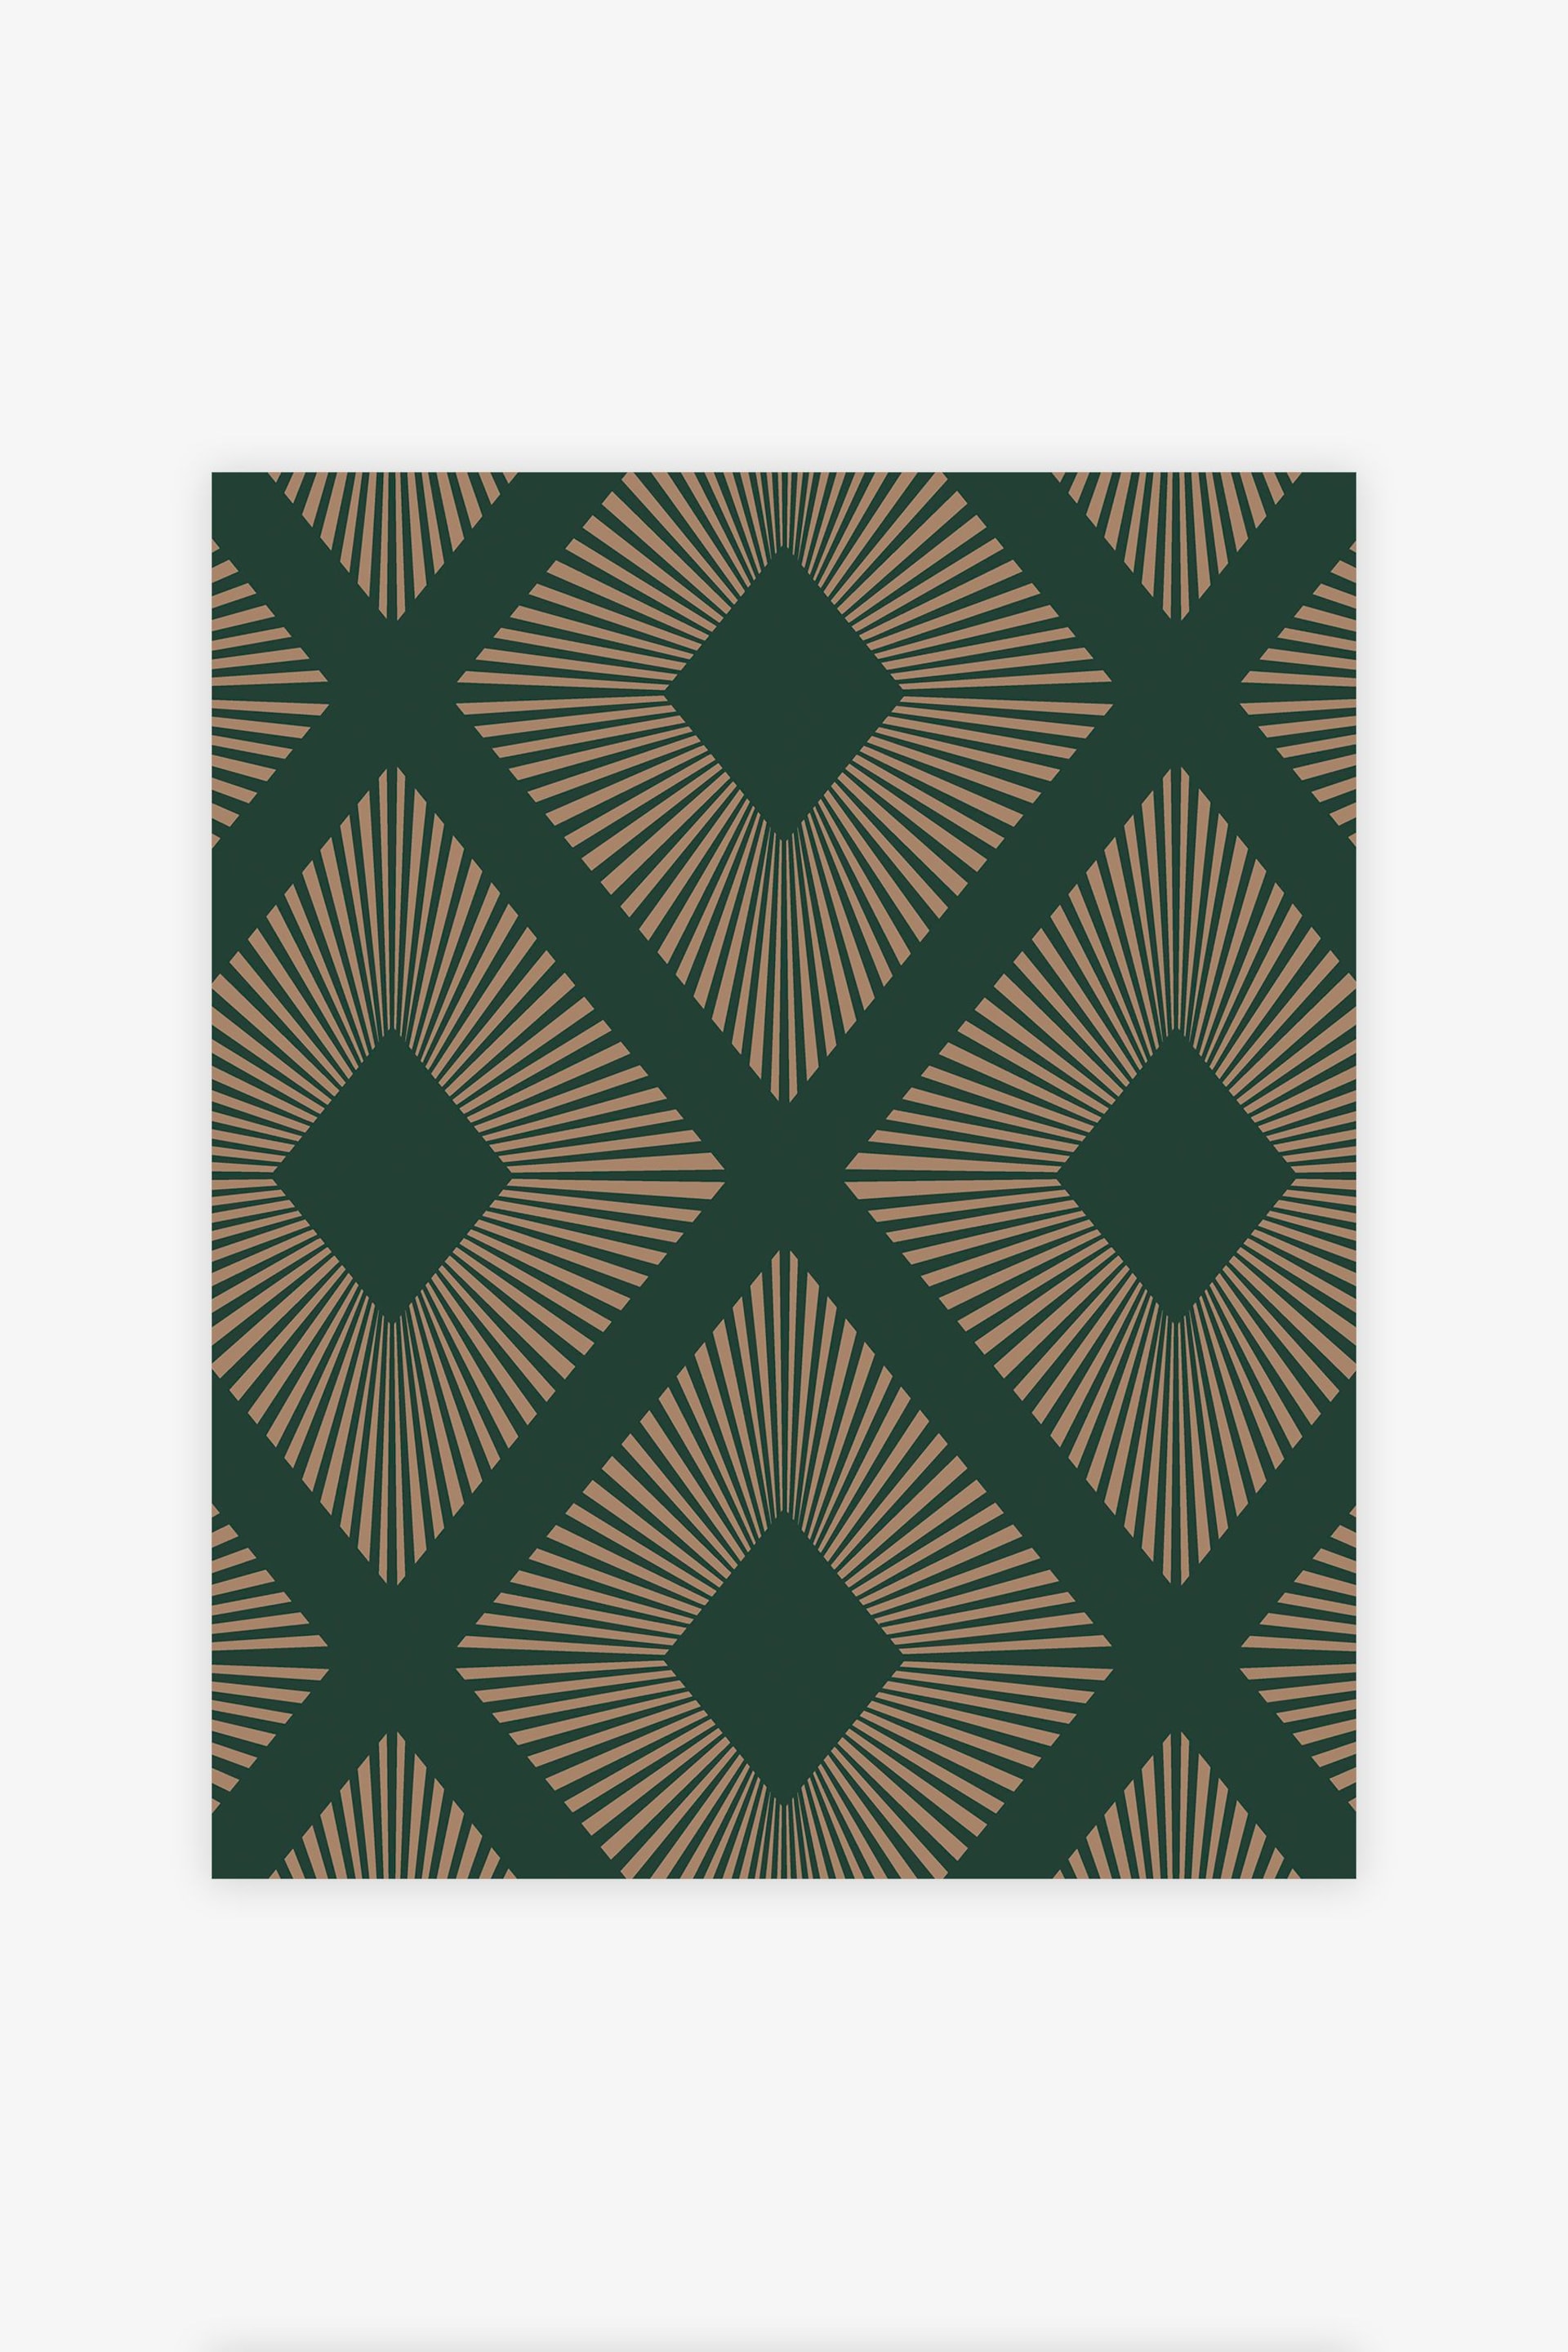 Emerald Green Deco Triangle Wallpaper - Image 3 of 4